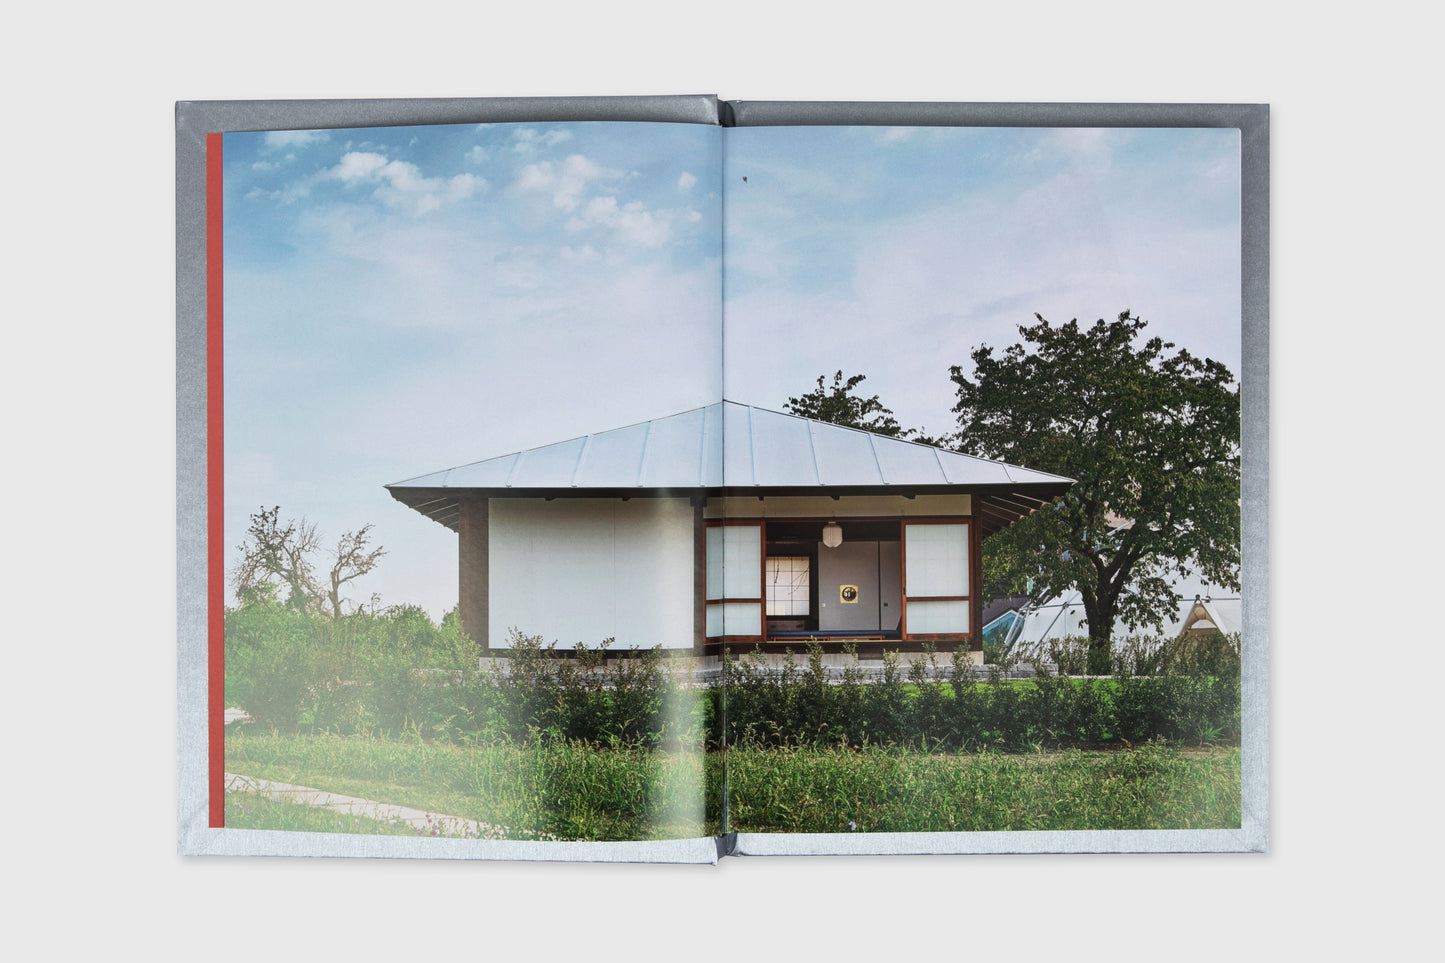 Kazuo Shinohara: The Umbrella House Project